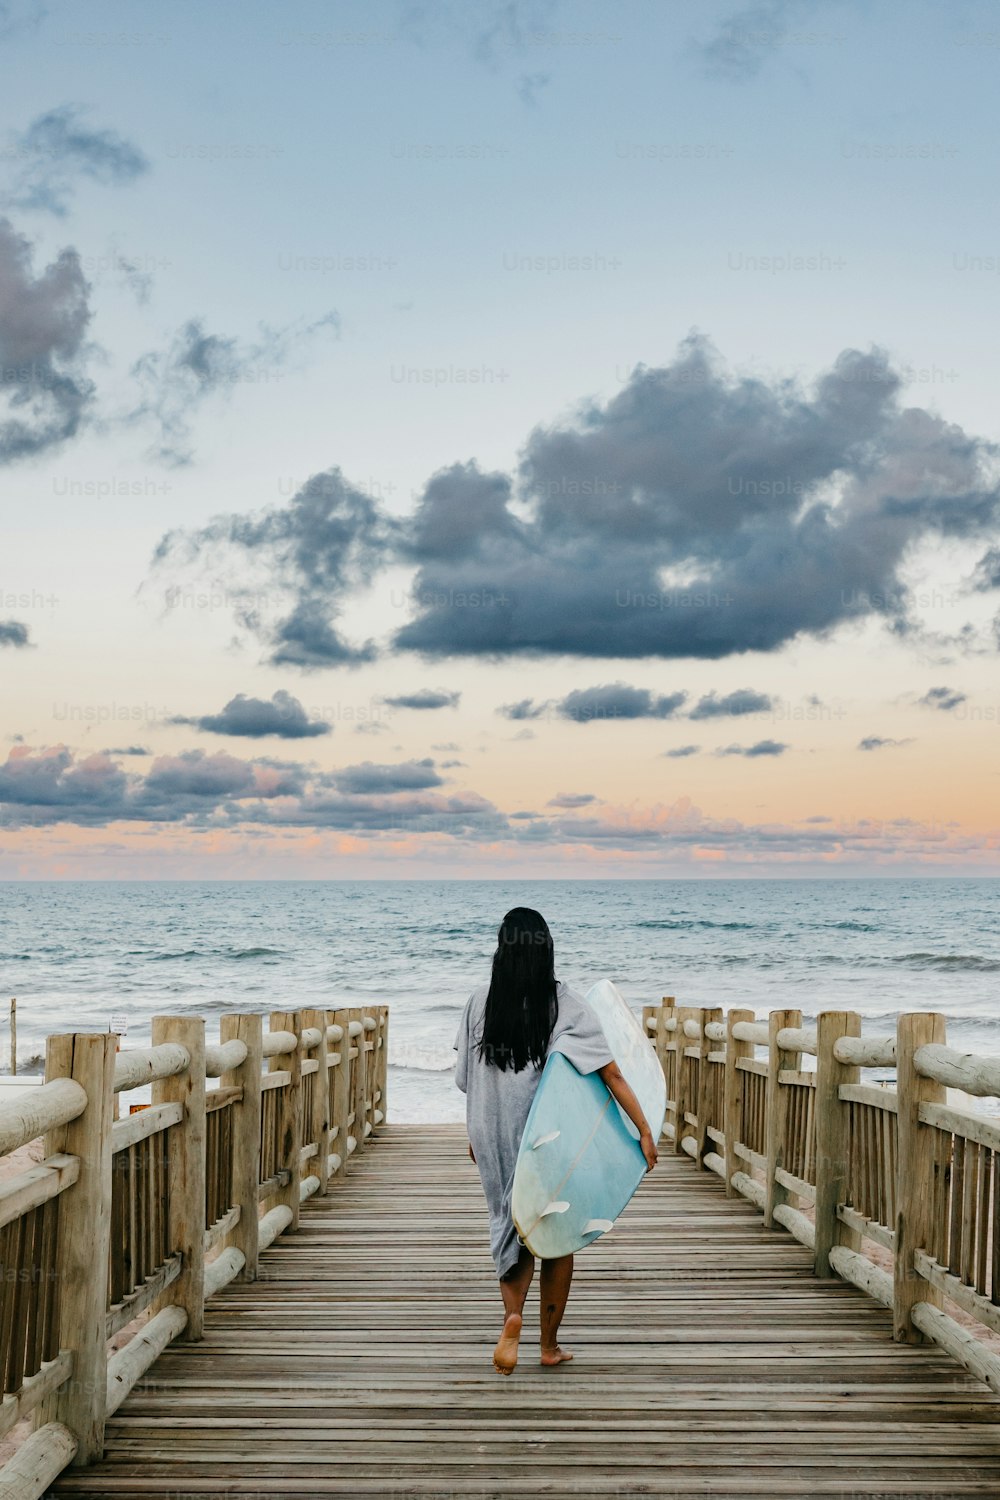 a woman carrying a surfboard walking down a pier